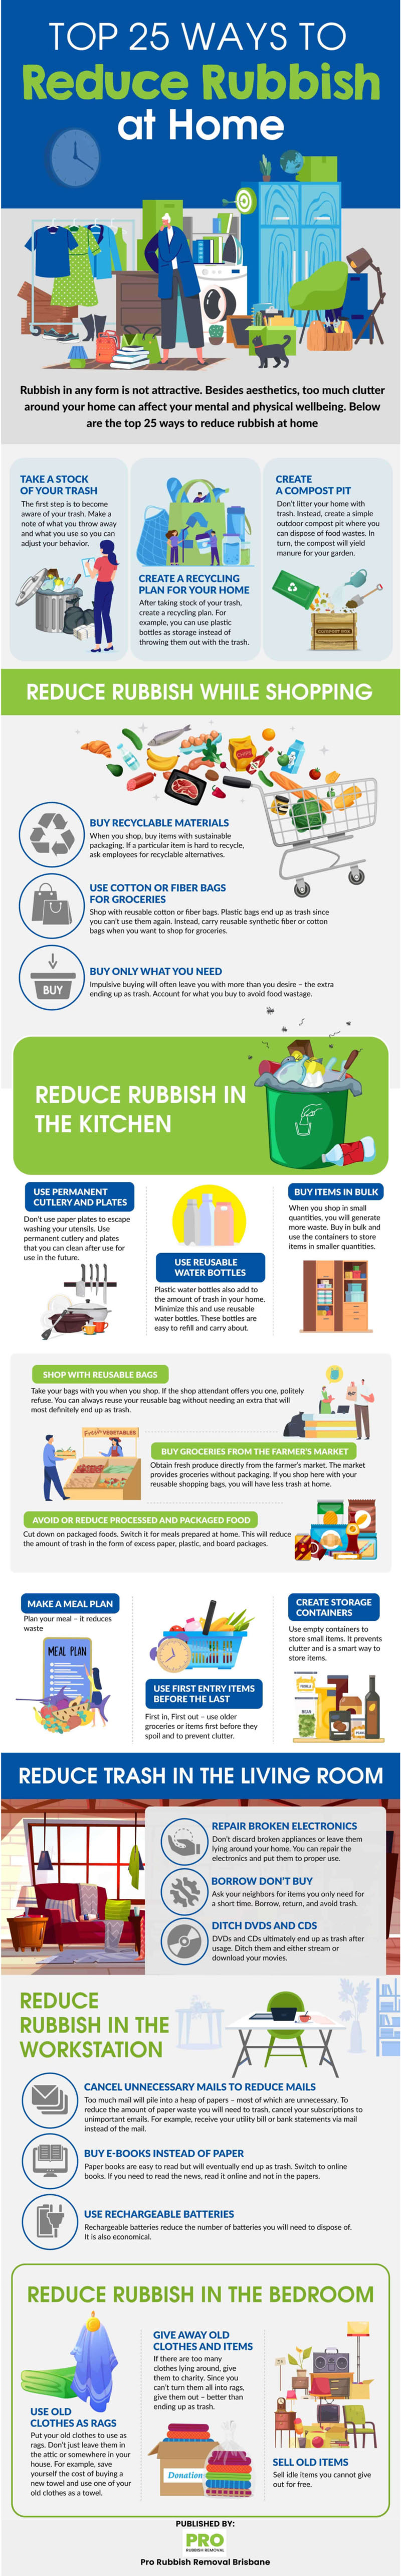 25 Ways to Reduce Rubbish Around Your Home